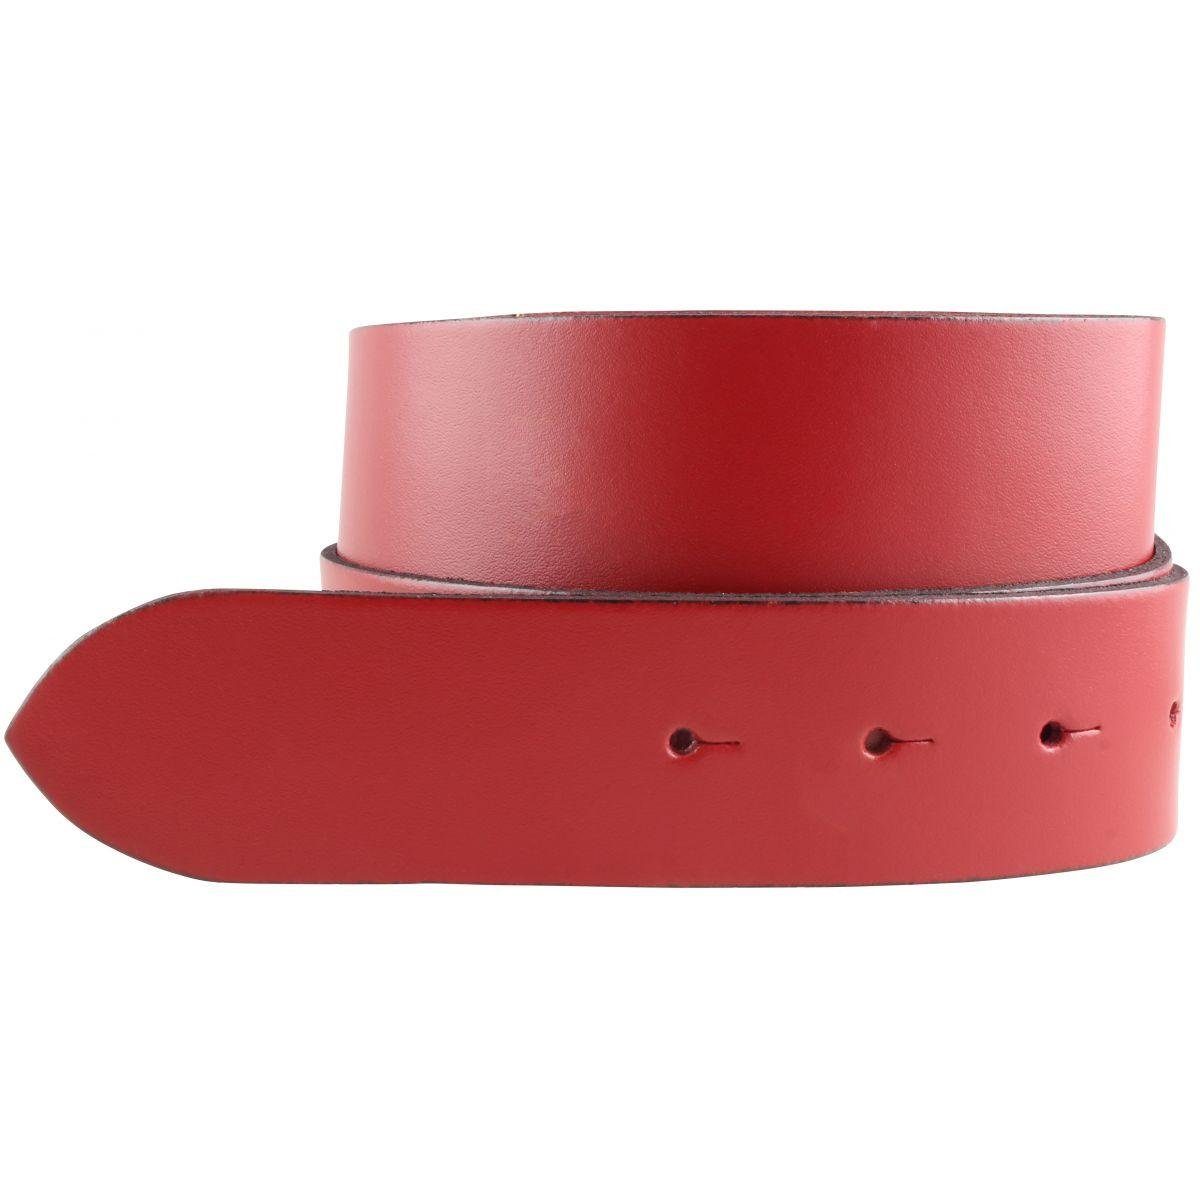 BELTINGER Ledergürtel Wechselgürtel aus 100% echtem Leder 4 cm - Druckknopf-Gürtel für Damen Rot | Gürtel